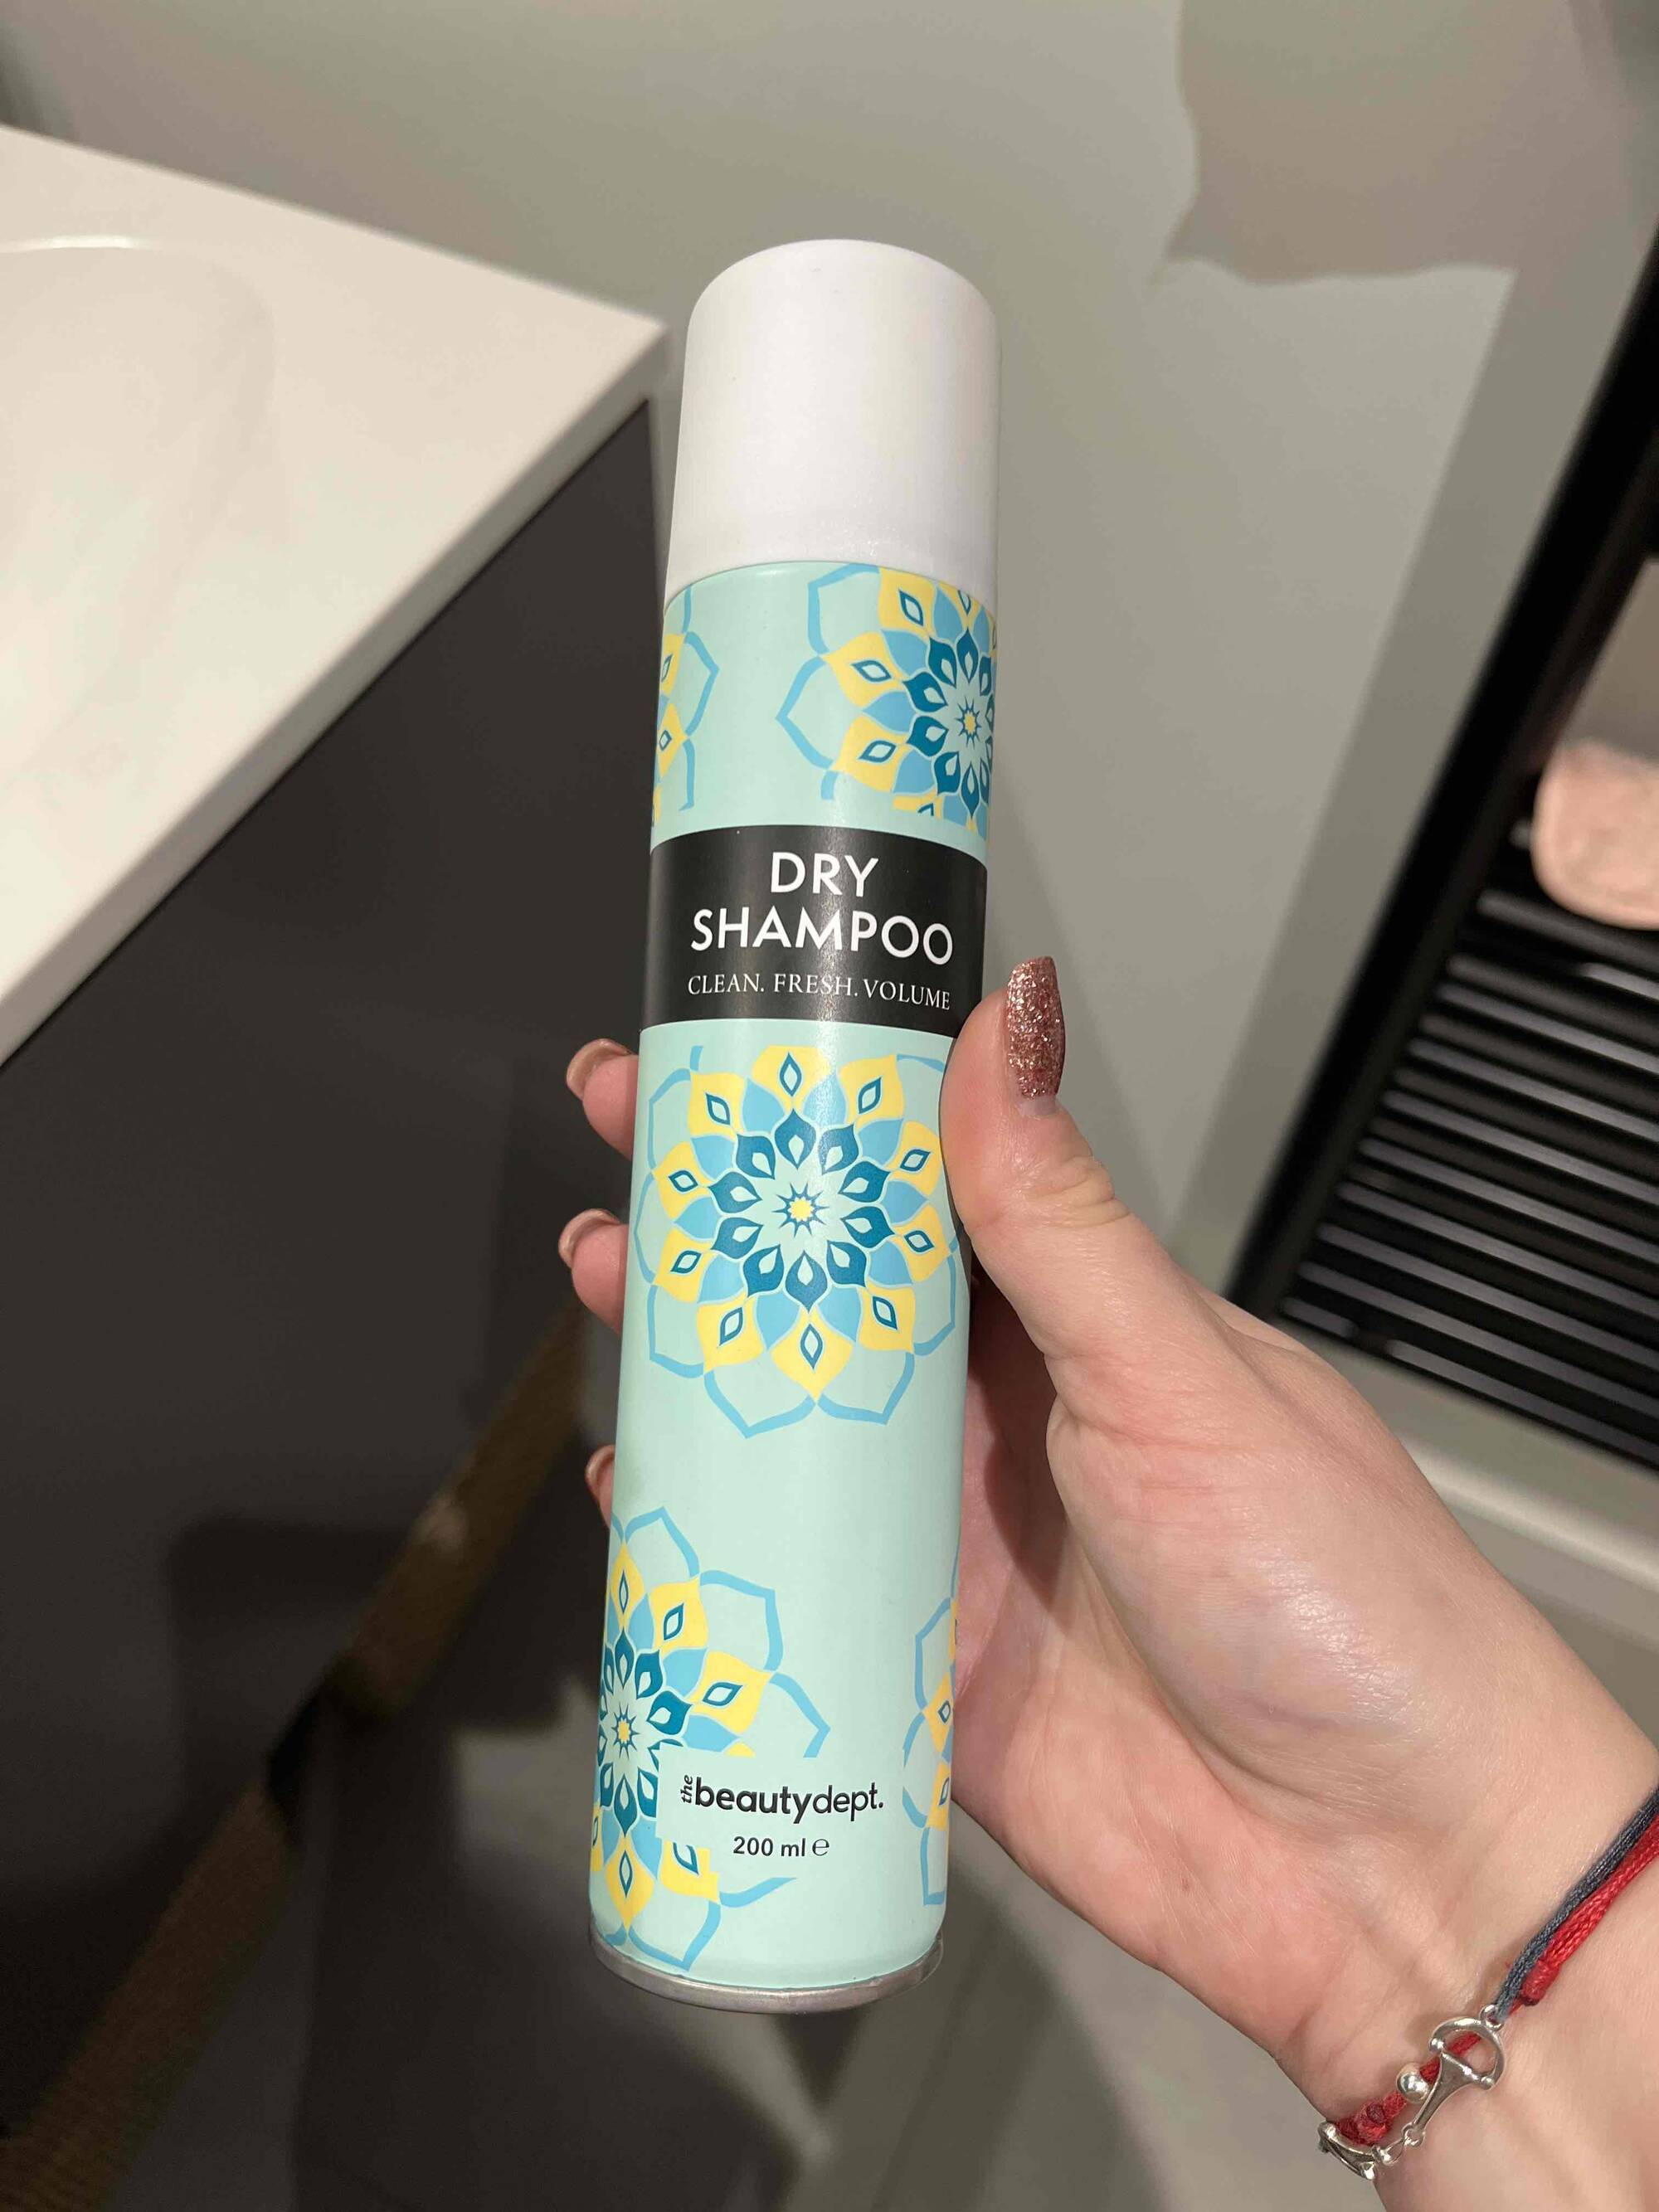 THE BEAUTY DEPT - Clean fresh volume - Dry shampoo